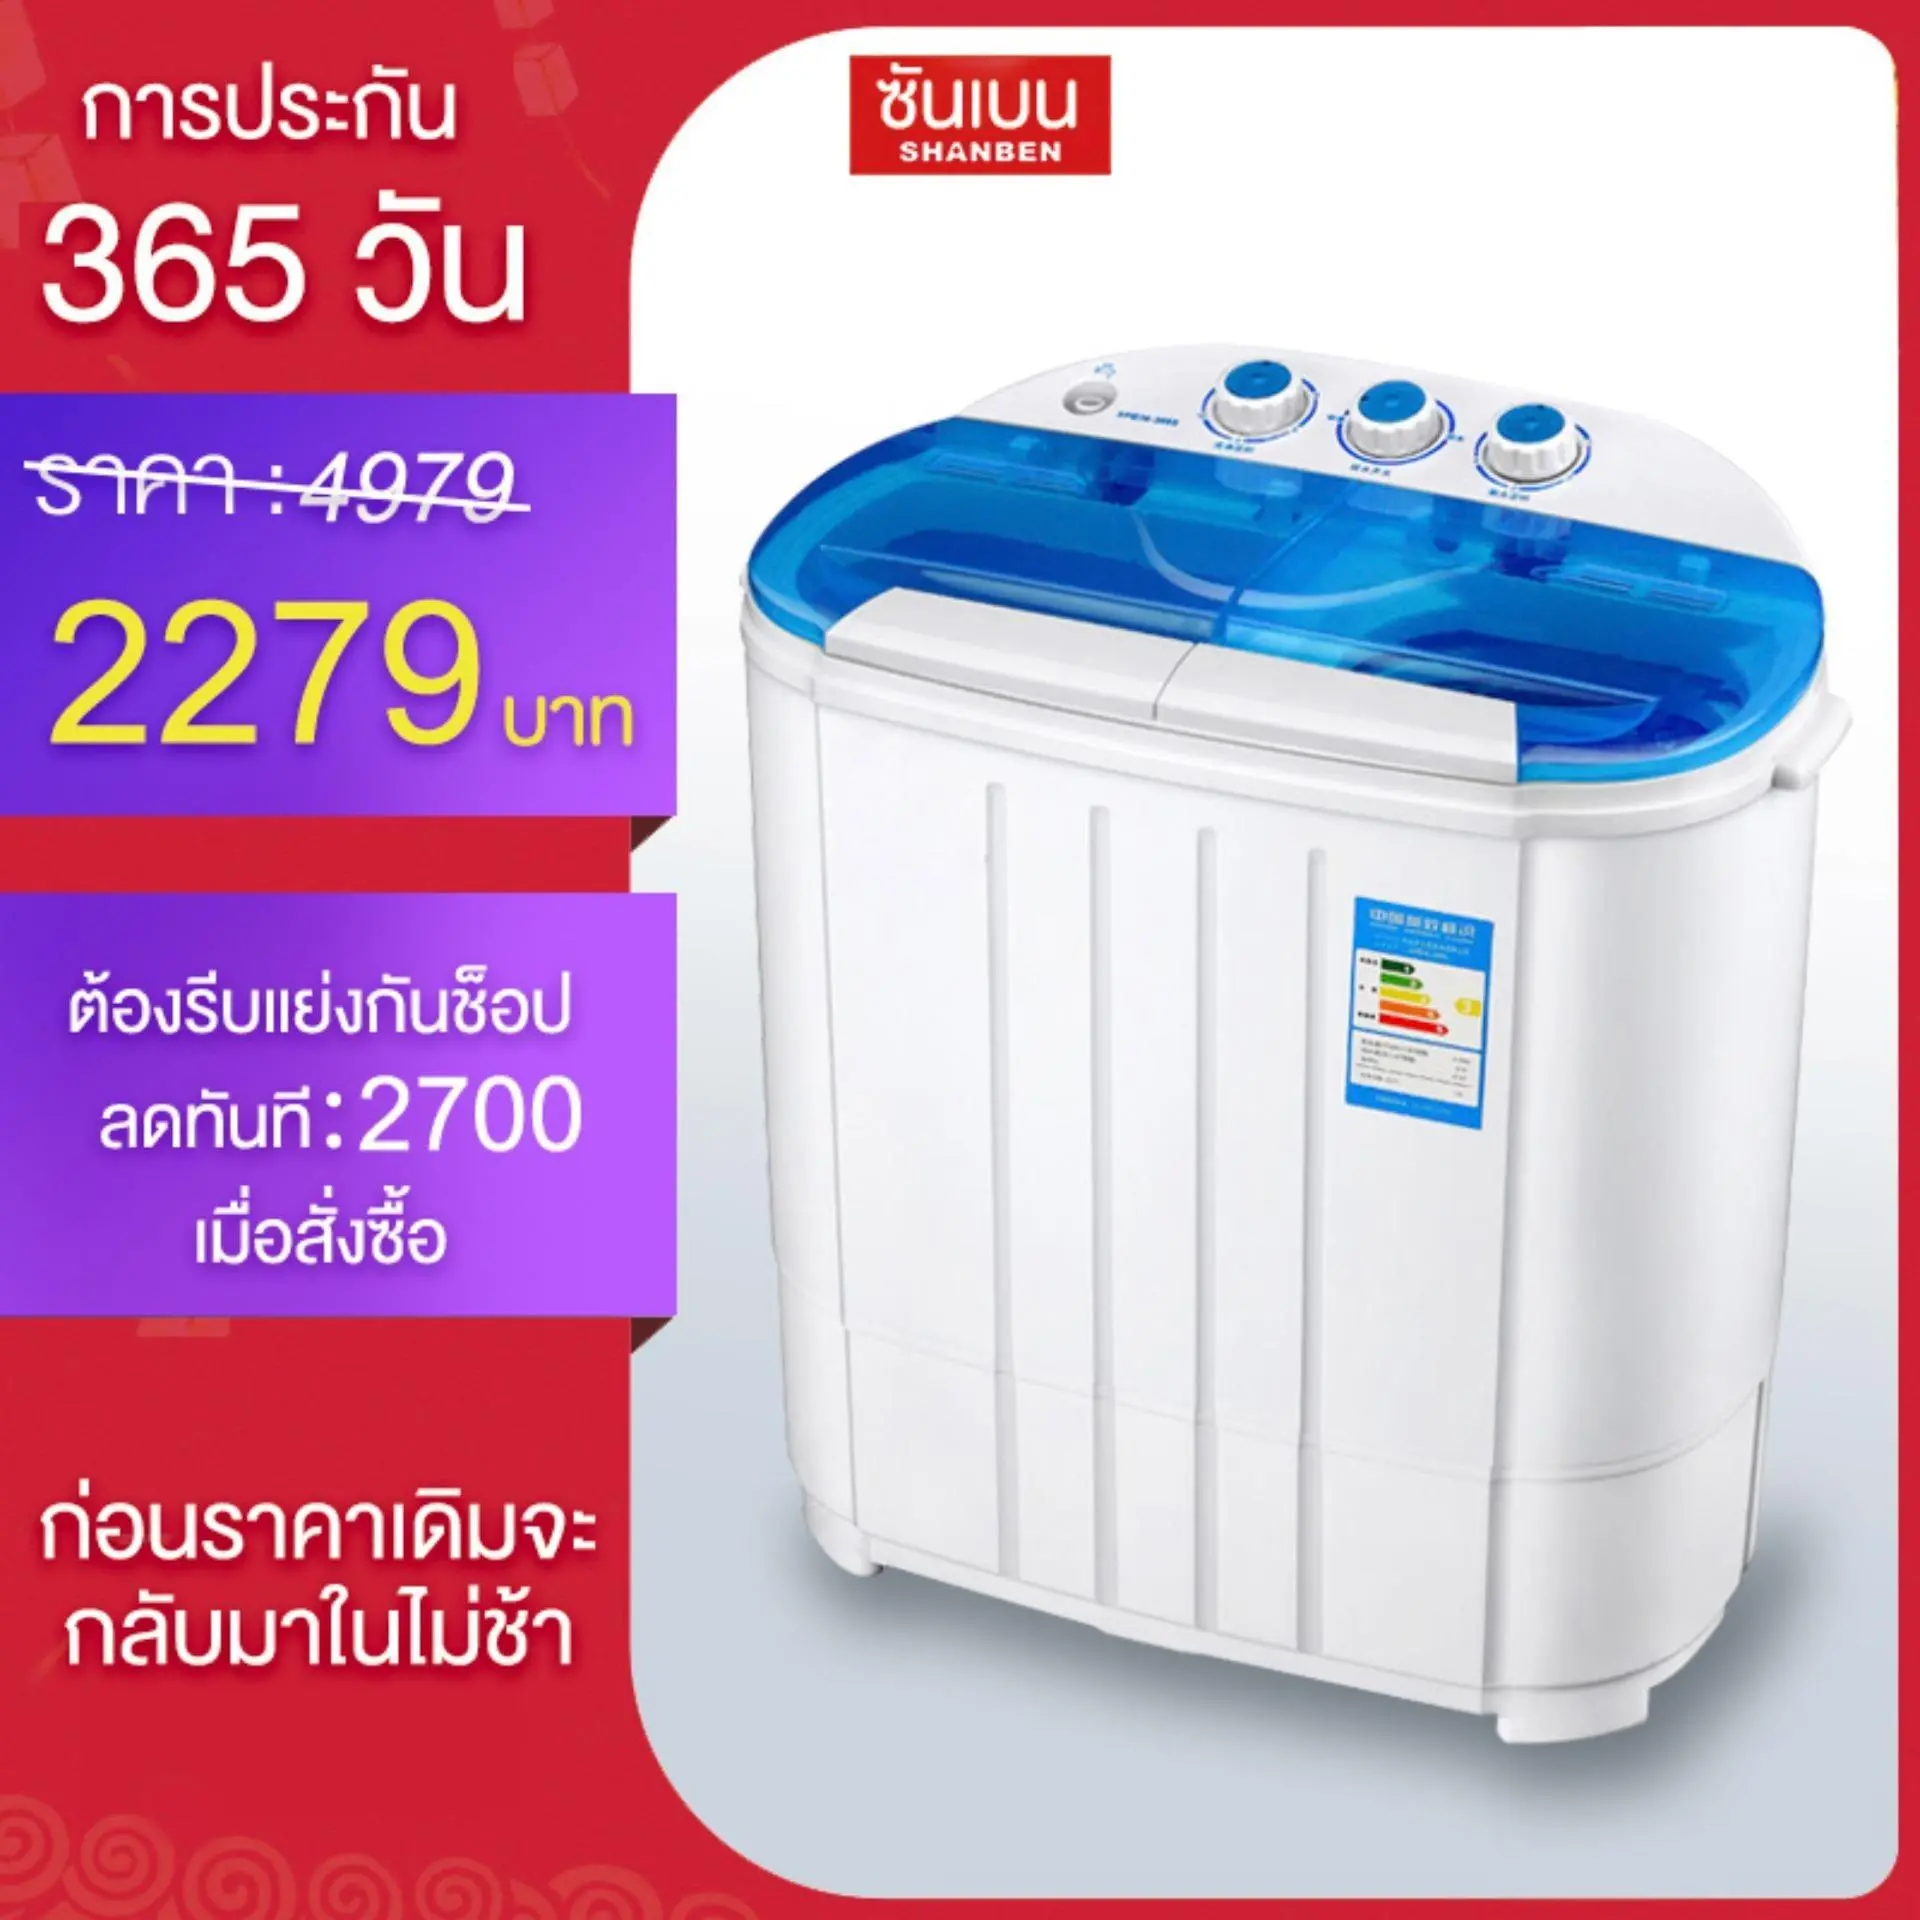 SHANBEN Washing Machine เครื่องซักผ้ามินิฝาบน ขนาด 4.5 Kg ฟังก์ชั่น 2 In 1 ซักและปั่นแห้งในตัวเดียวกัน ประหยัดน้ำและพลังงาน Duckling Mini Washing Machine เครื่องซักผ้า